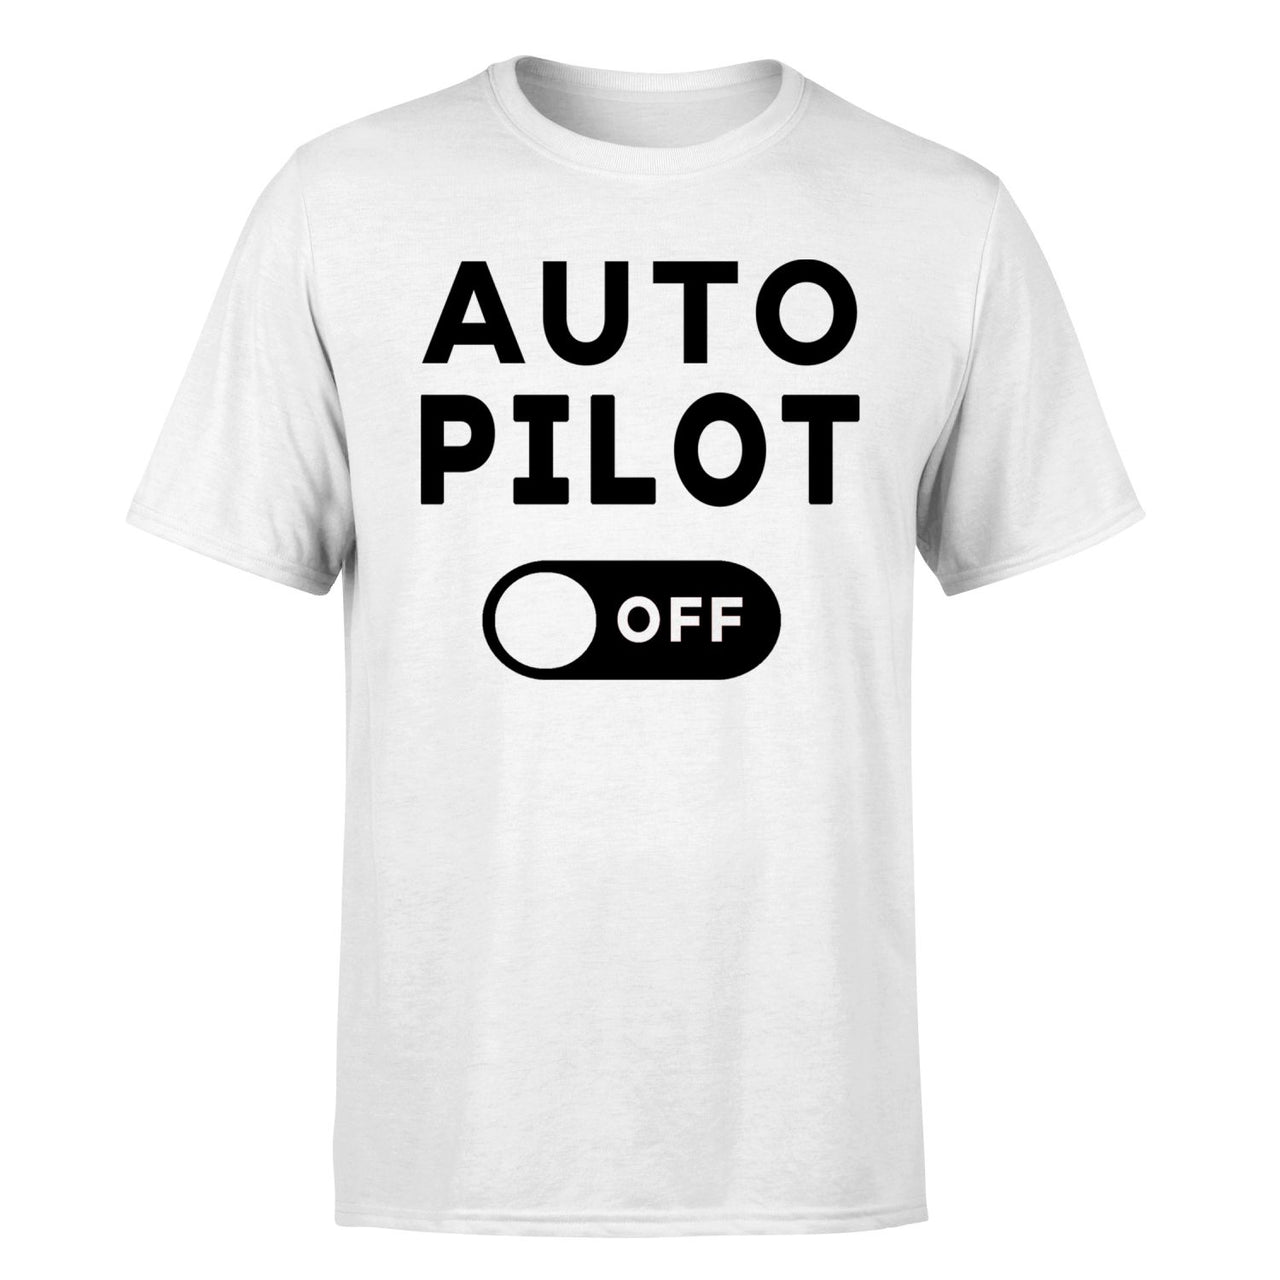 Auto Pilot Off Designed T-Shirts